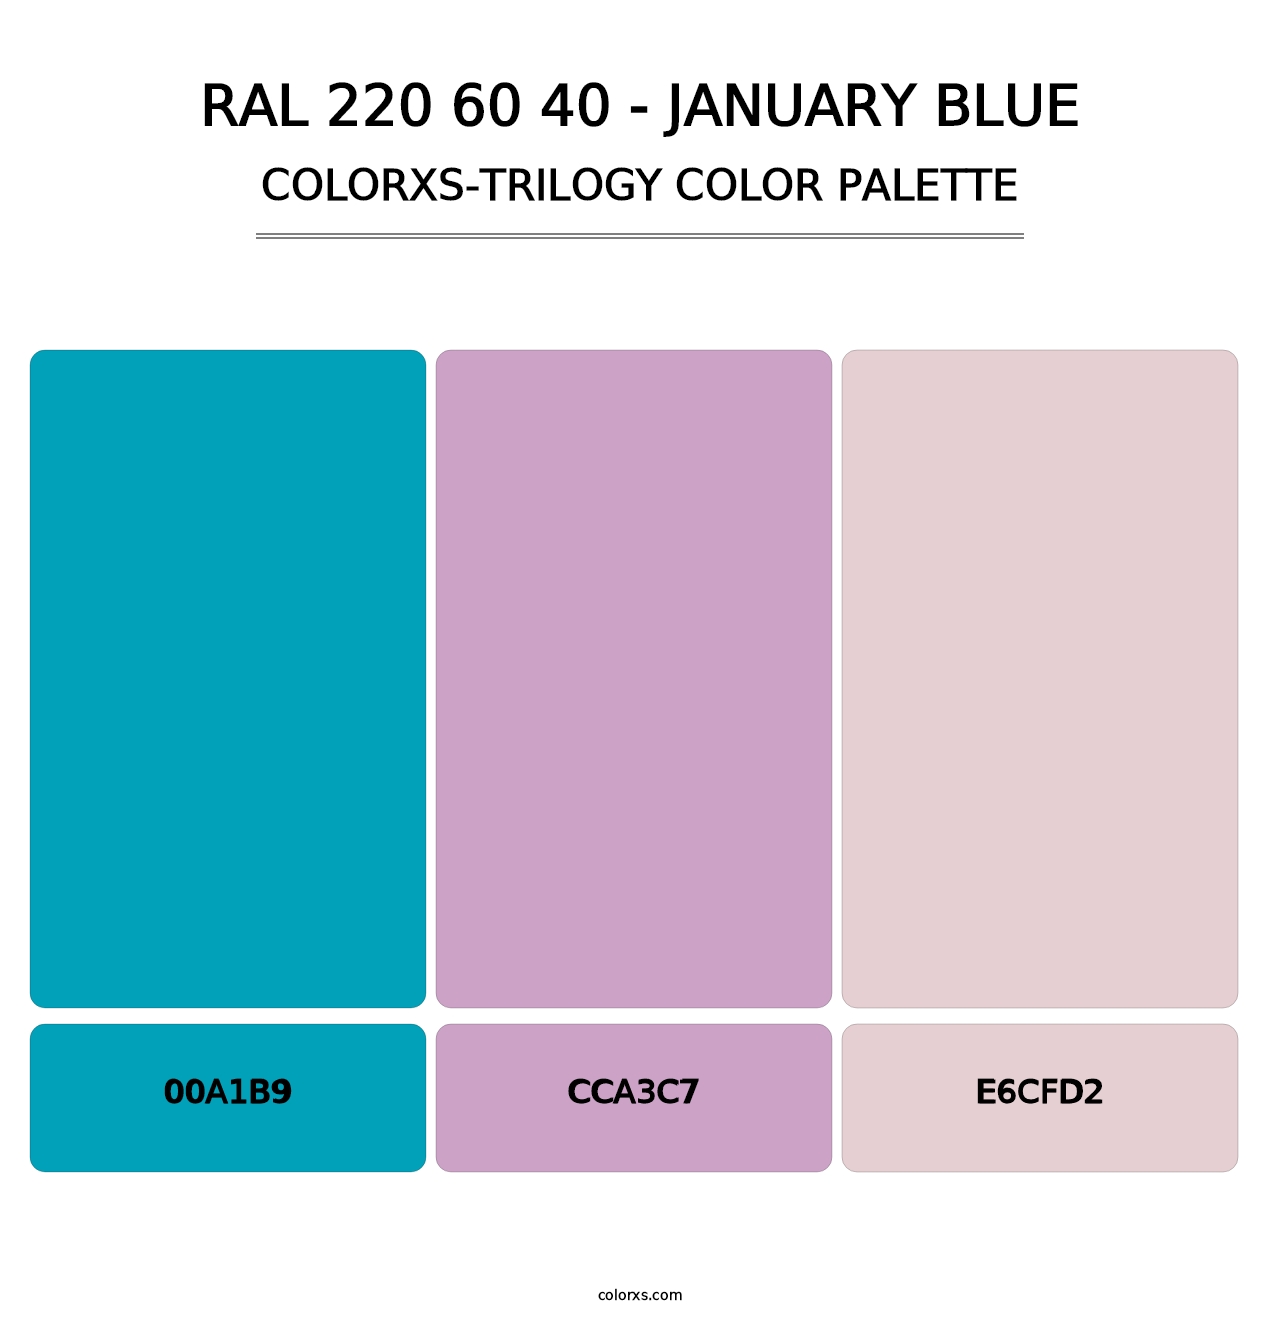 RAL 220 60 40 - January Blue - Colorxs Trilogy Palette